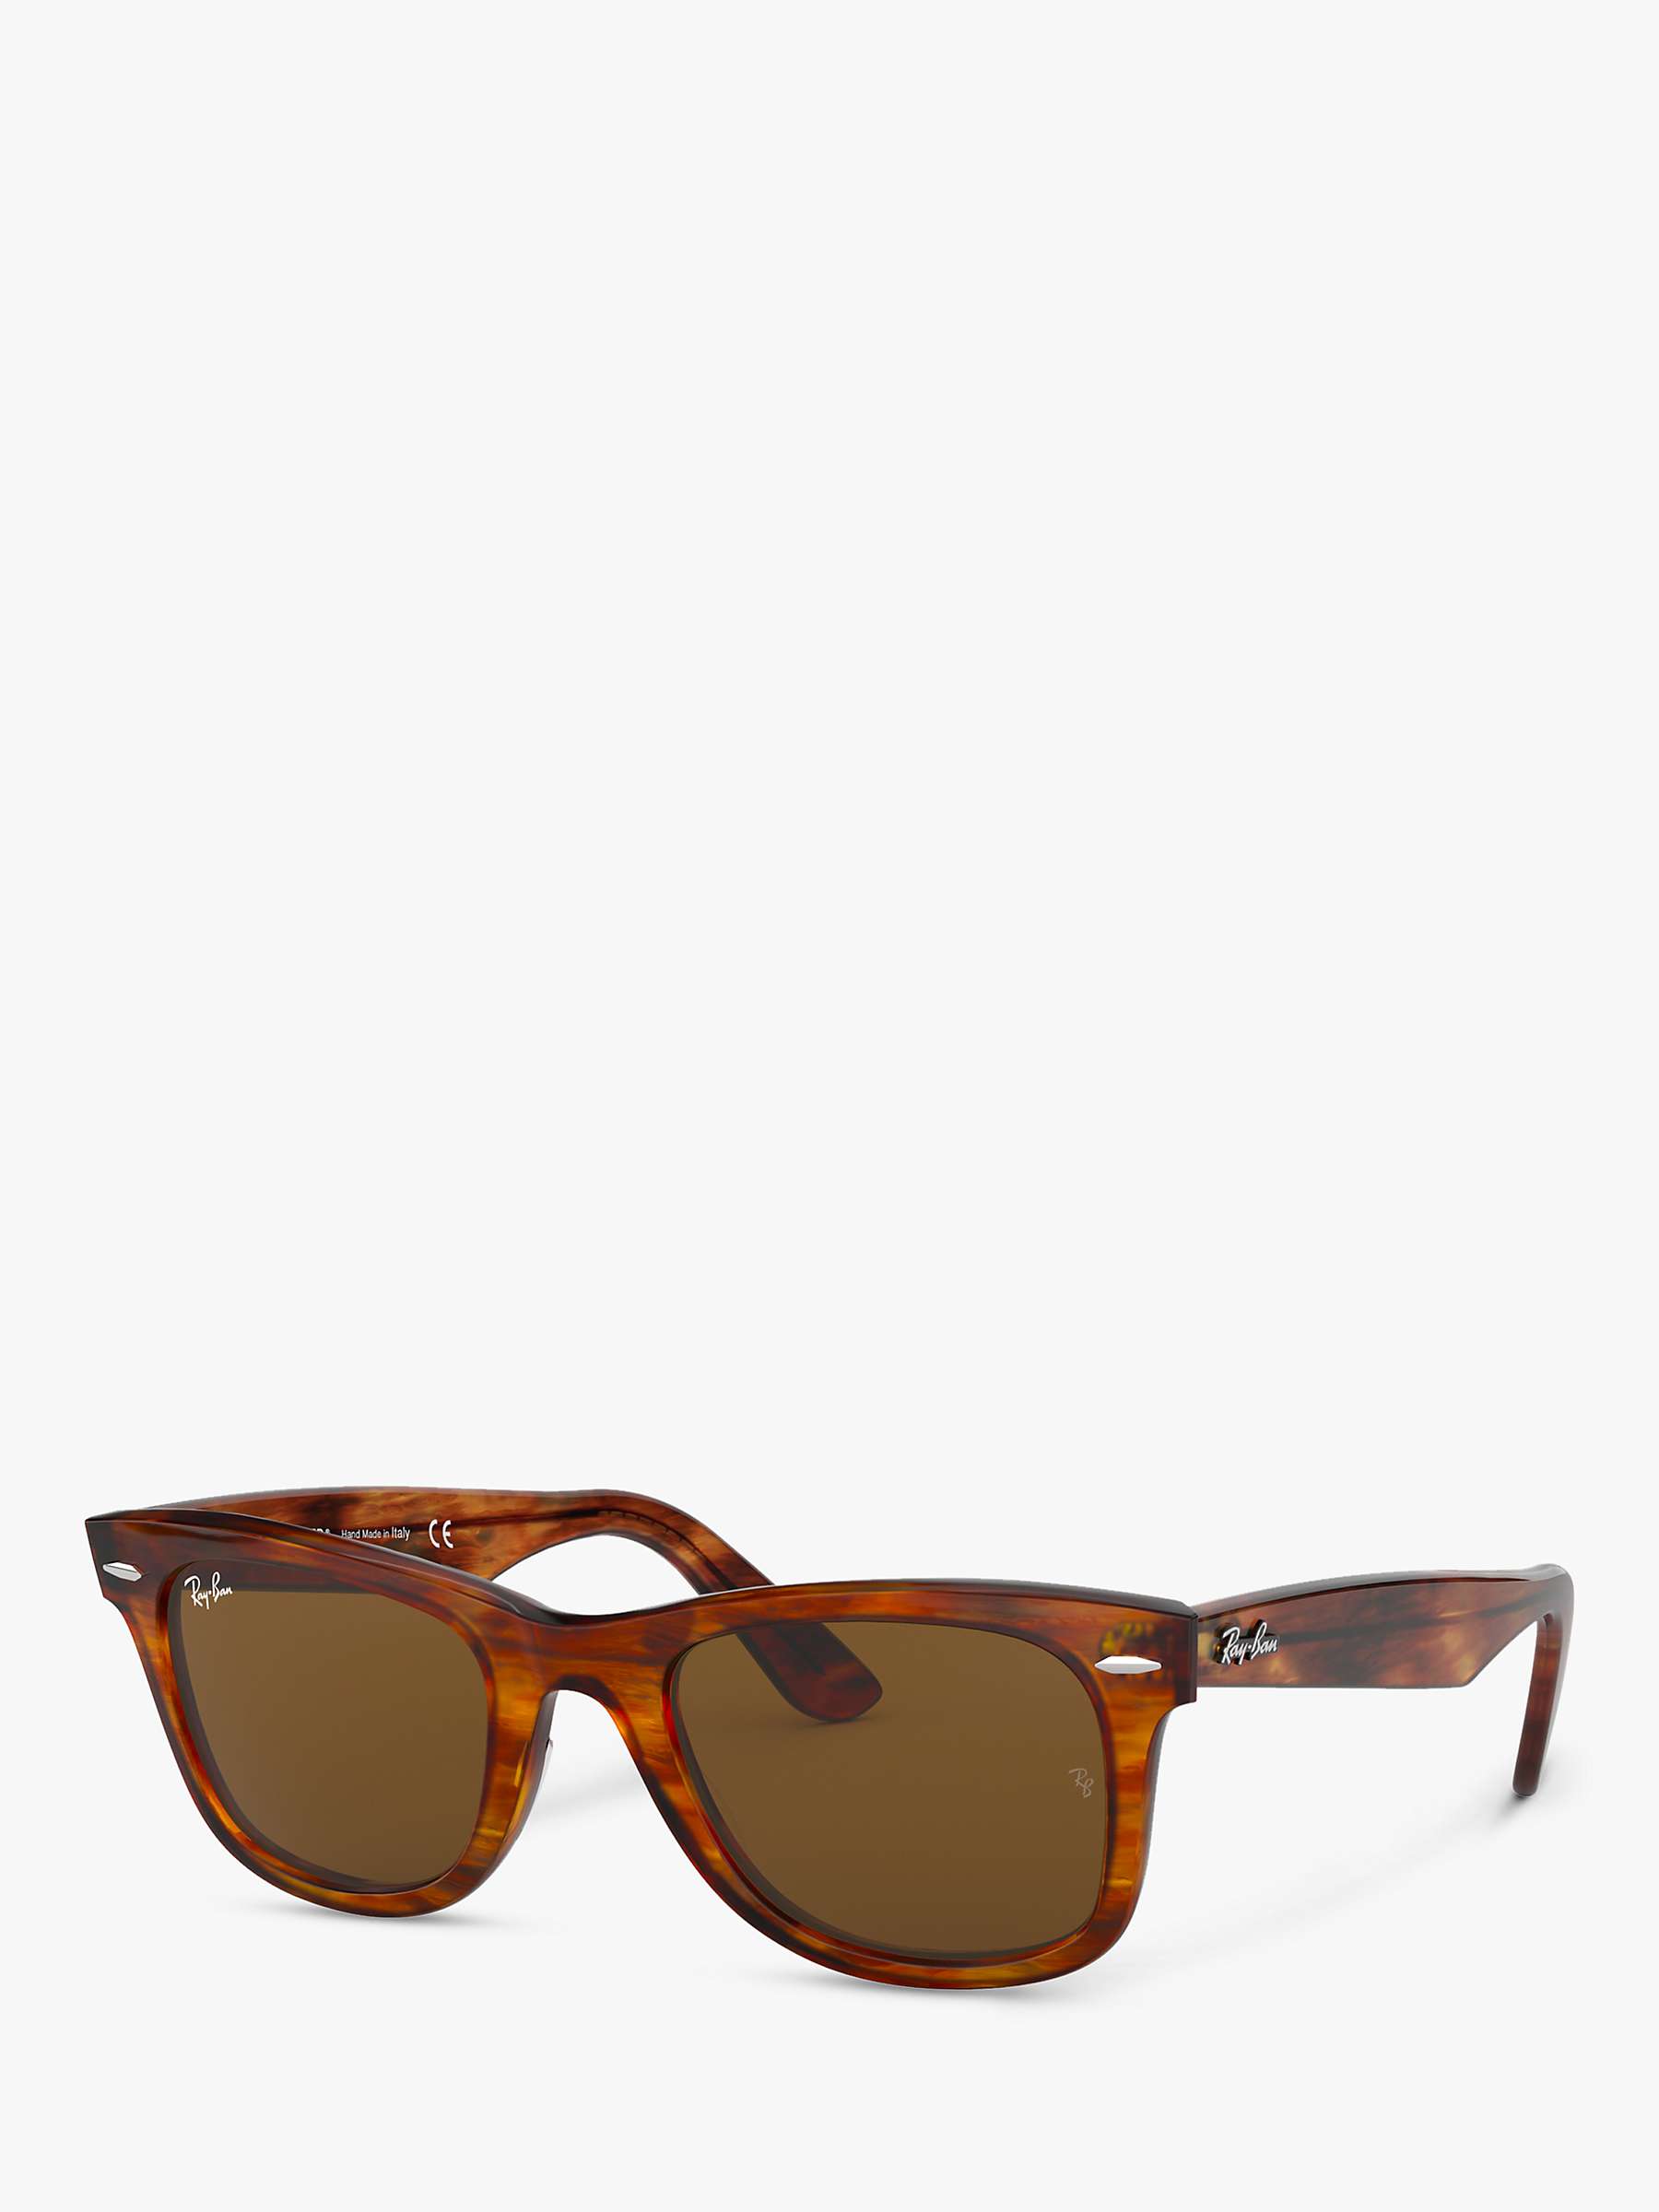 Buy Ray-Ban RB2140 Unisex Original Wayfarer Sunglasses, Light Tortoise/Brown Online at johnlewis.com